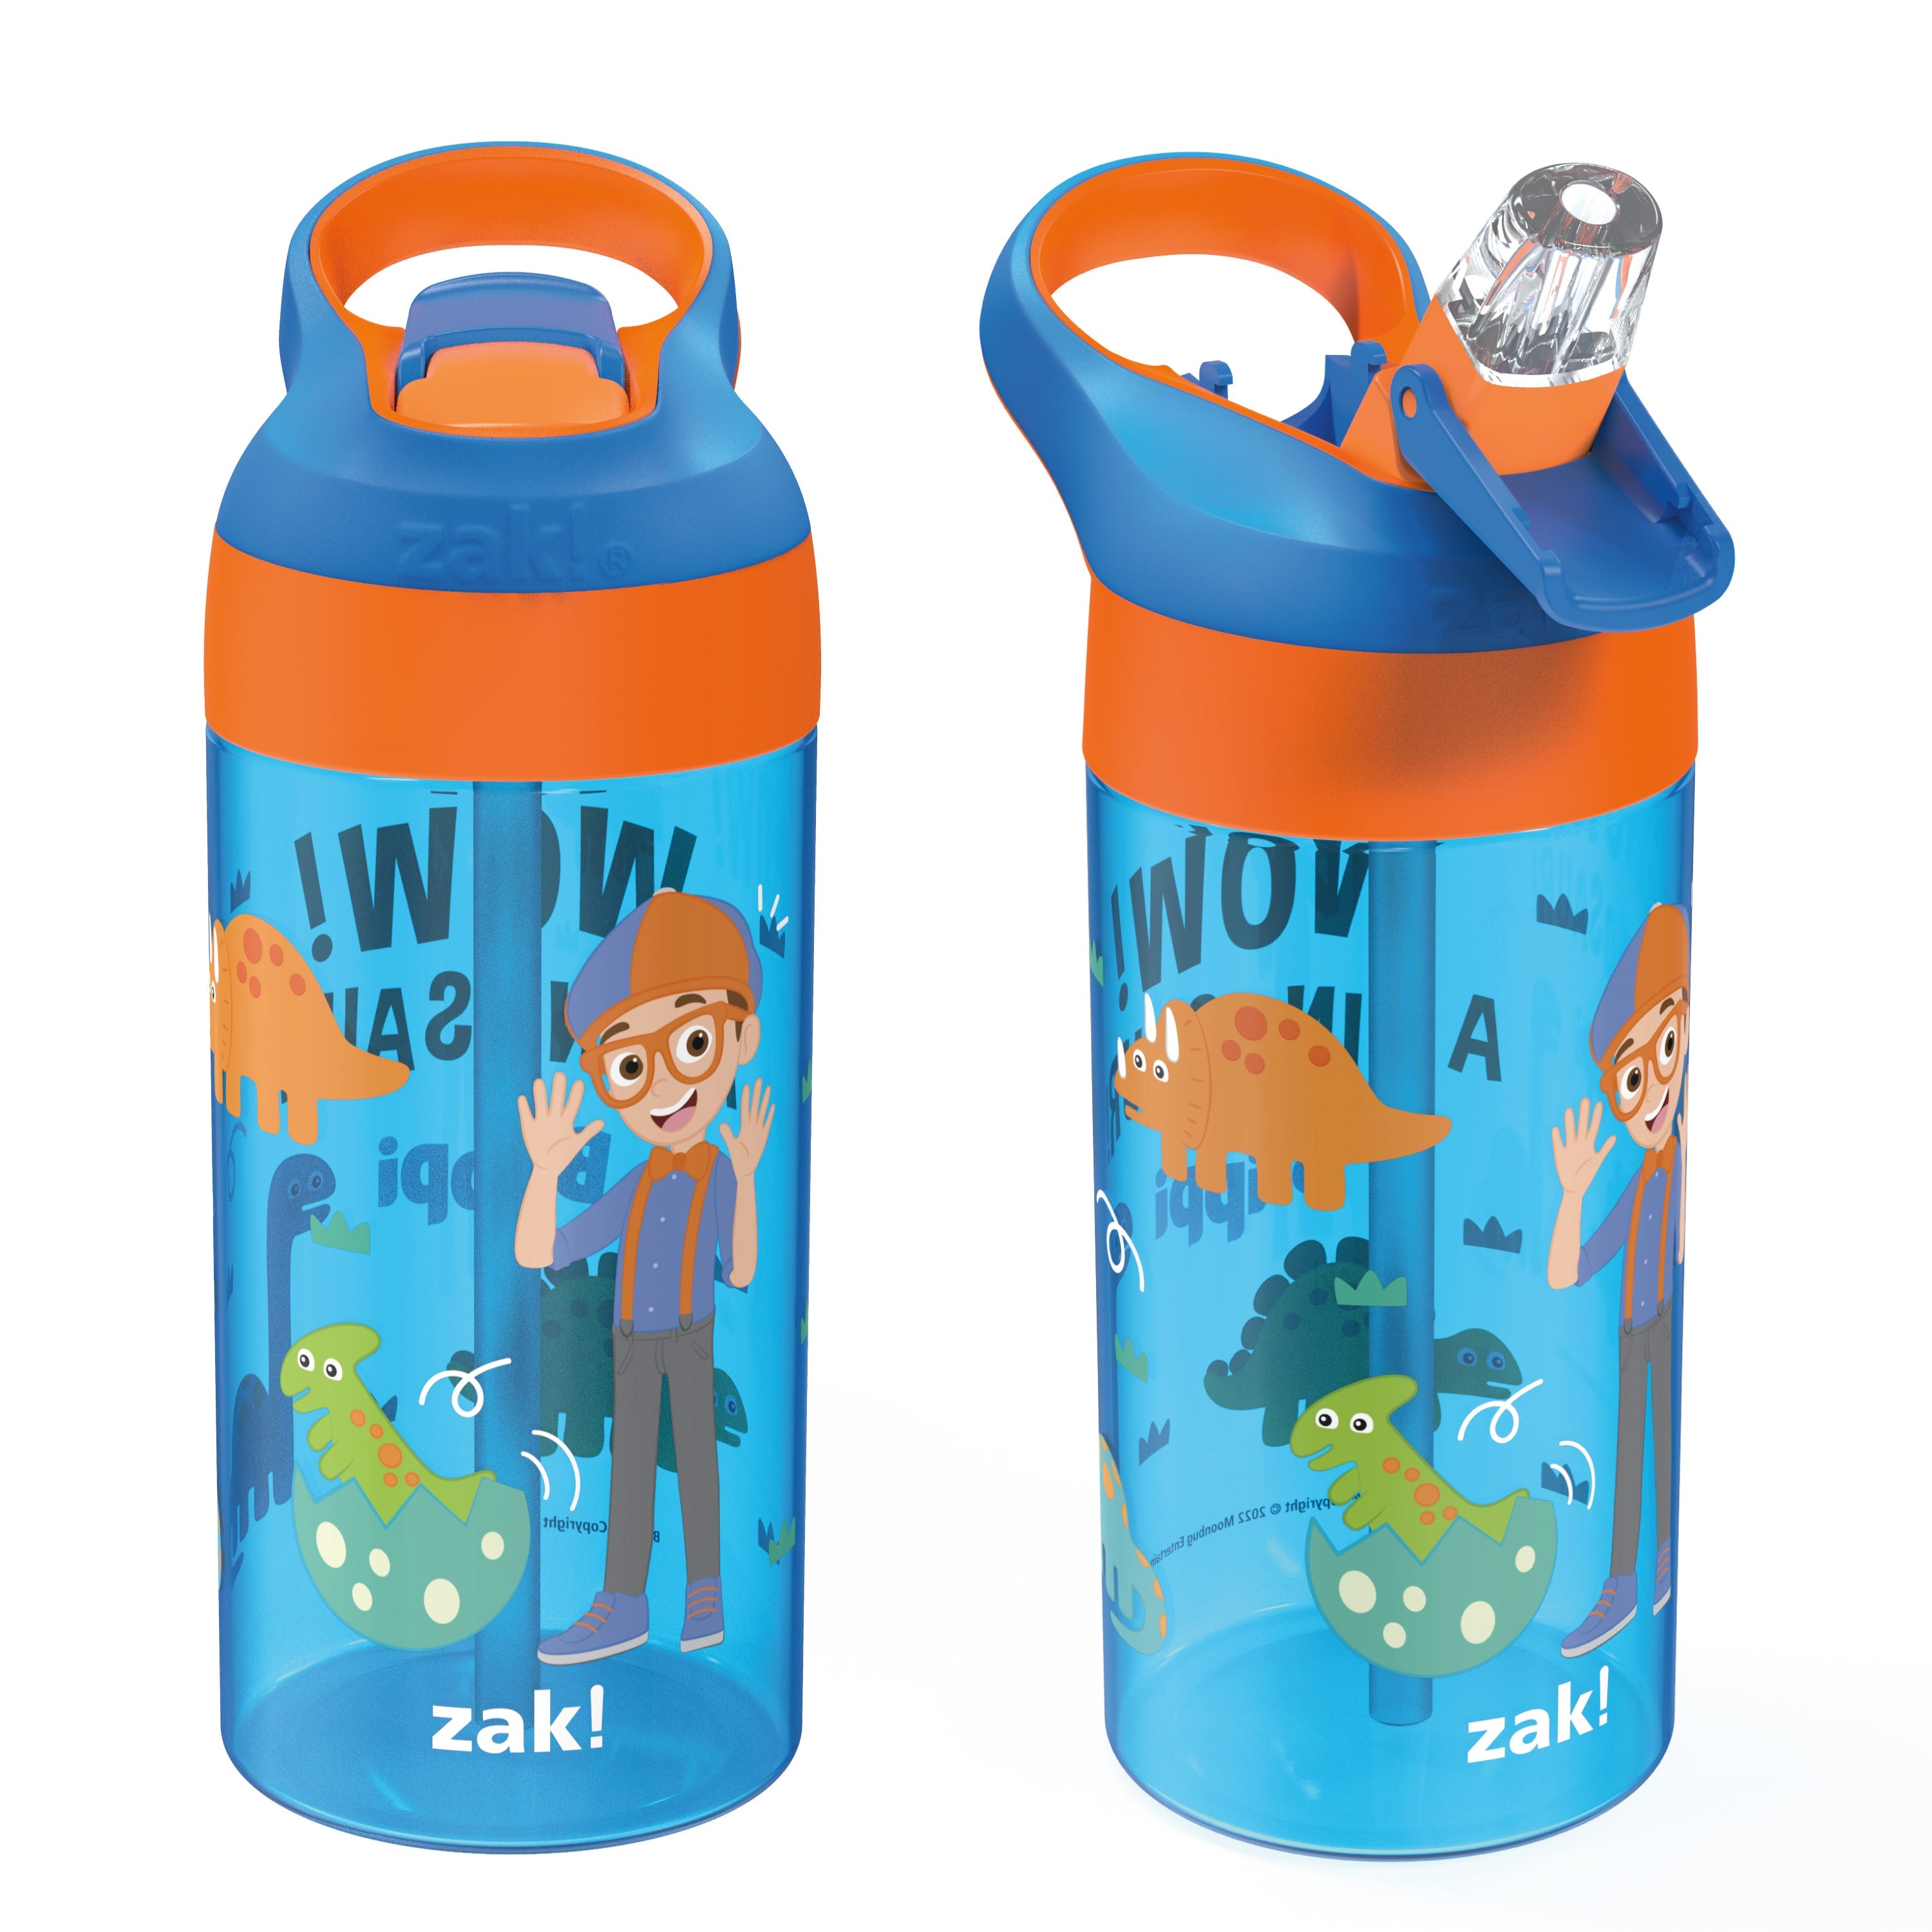  Zak Designs Minecraft Plastic Water Bottle with Push